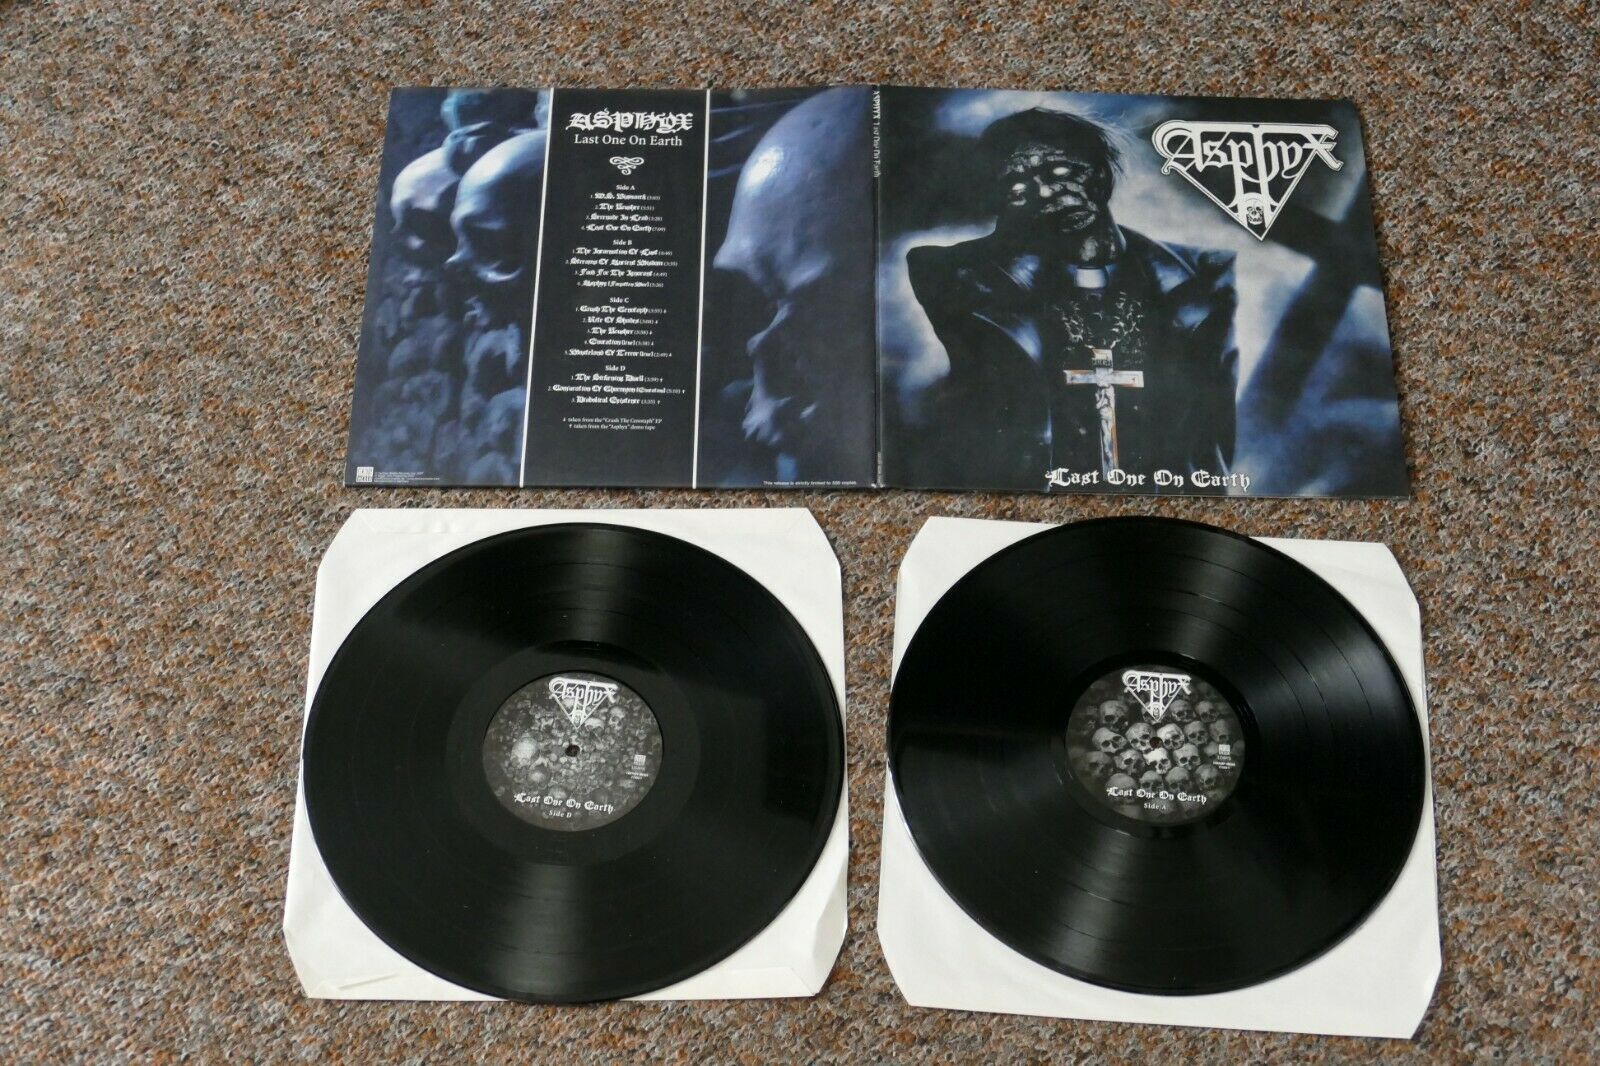 popsike.com - ASPHYX last one on earth 2 x Vinyl LP lim. 500 crush the  cenotaph Death Metal - auction details